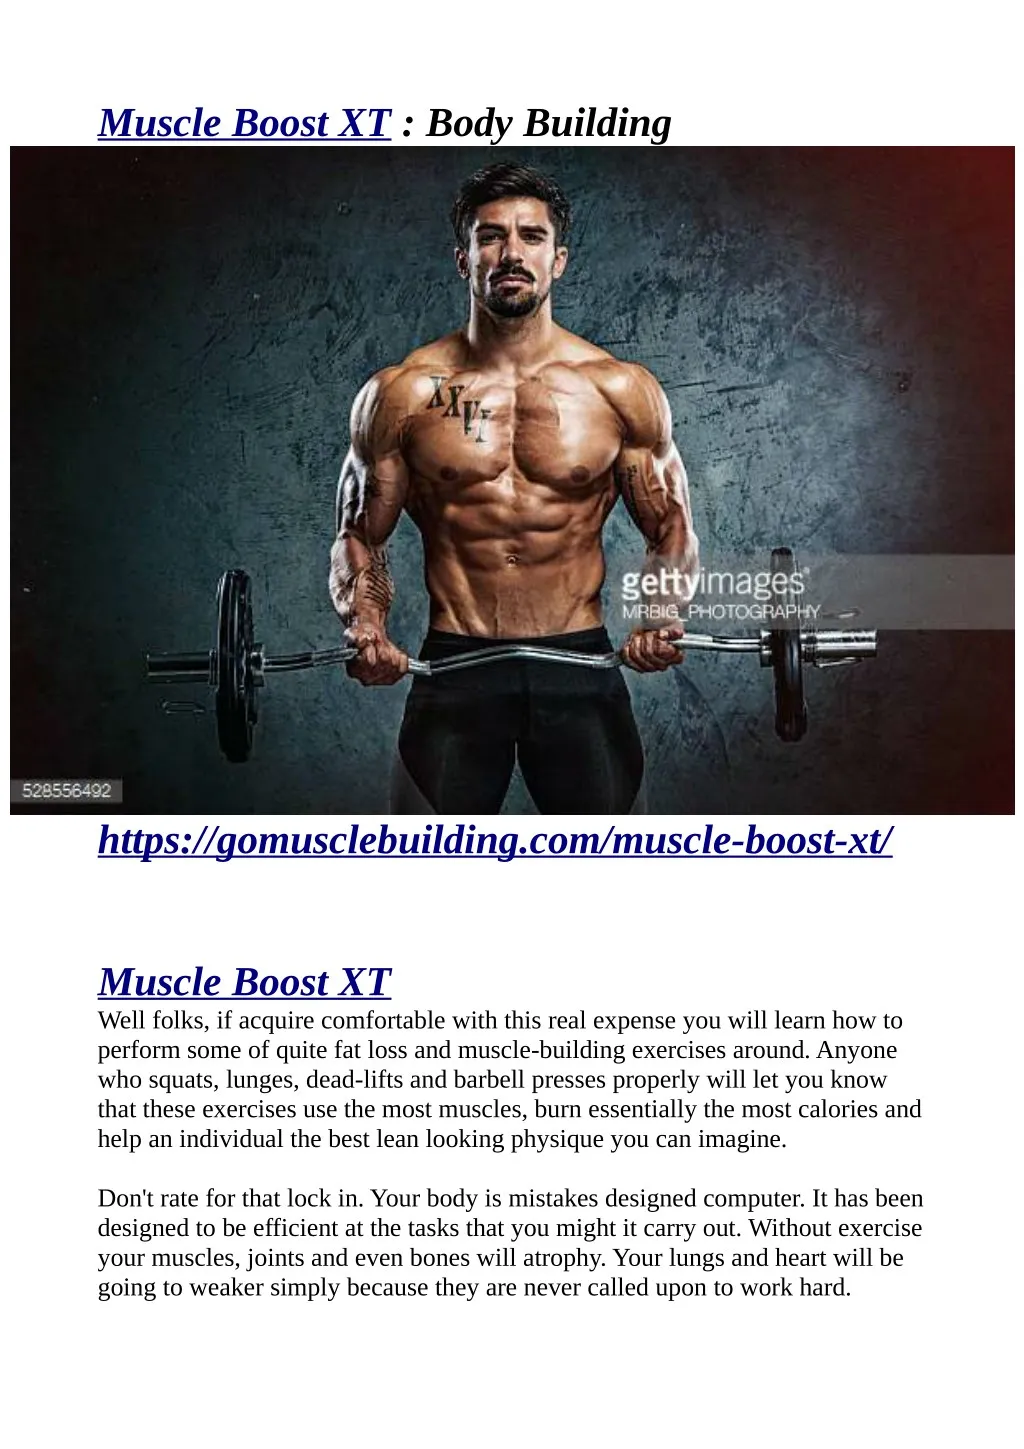 muscle boost xt body building